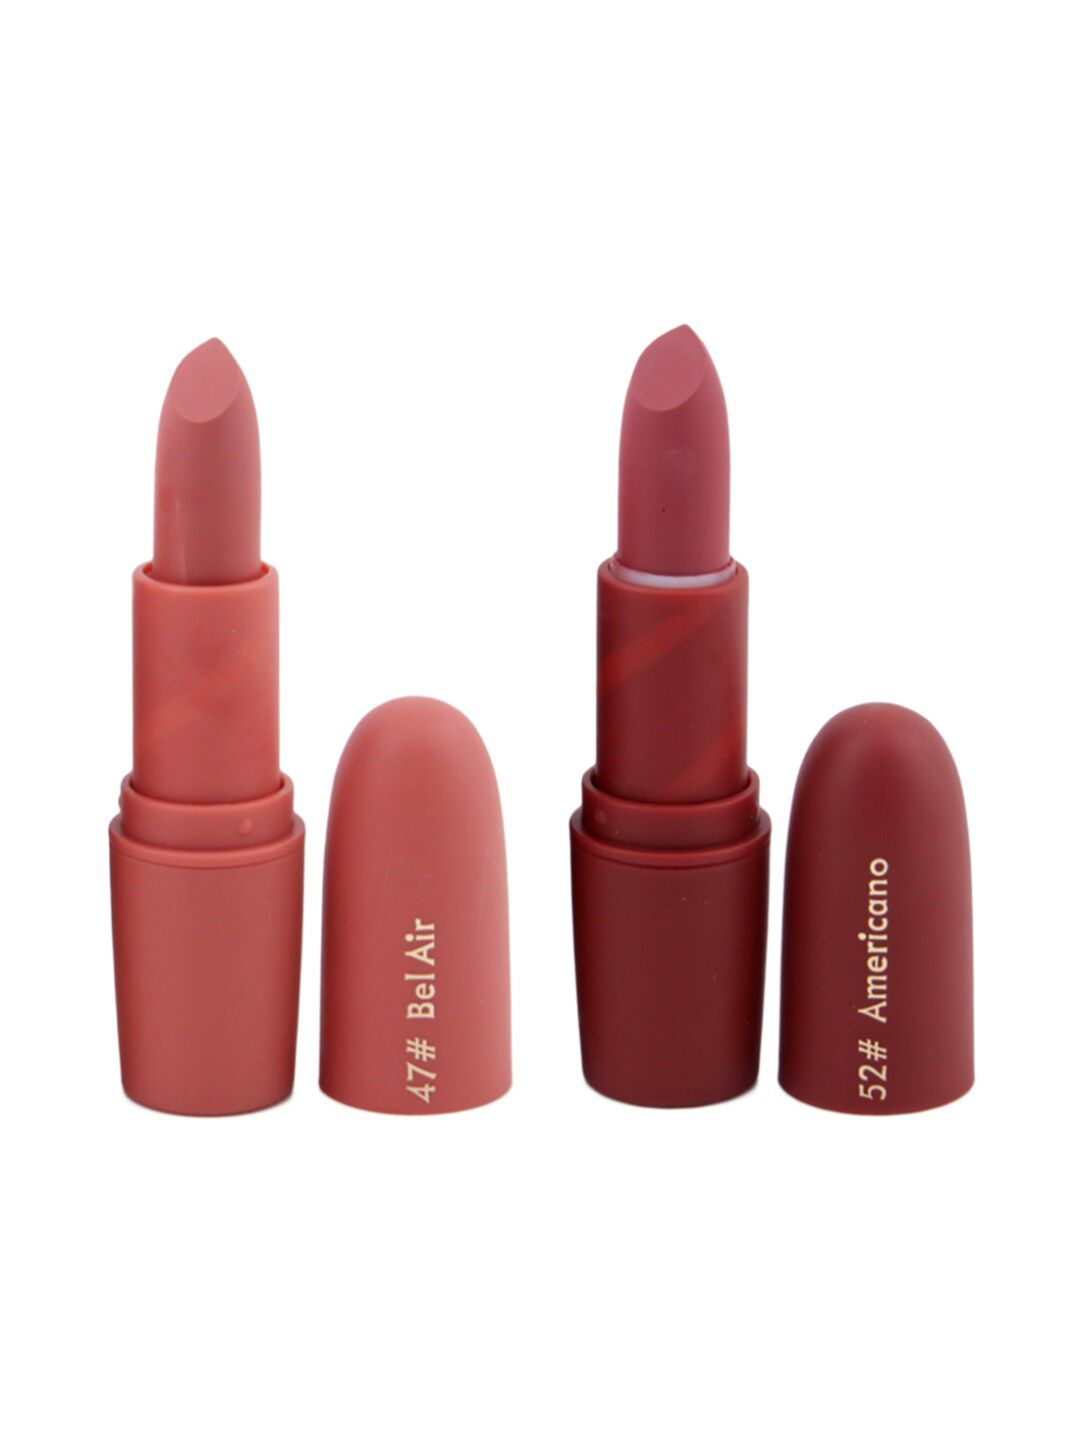 MISS ROSE Set of 2 Matte Creamy Lipsticks - Bel Air 47 & Americano 52 Price in India